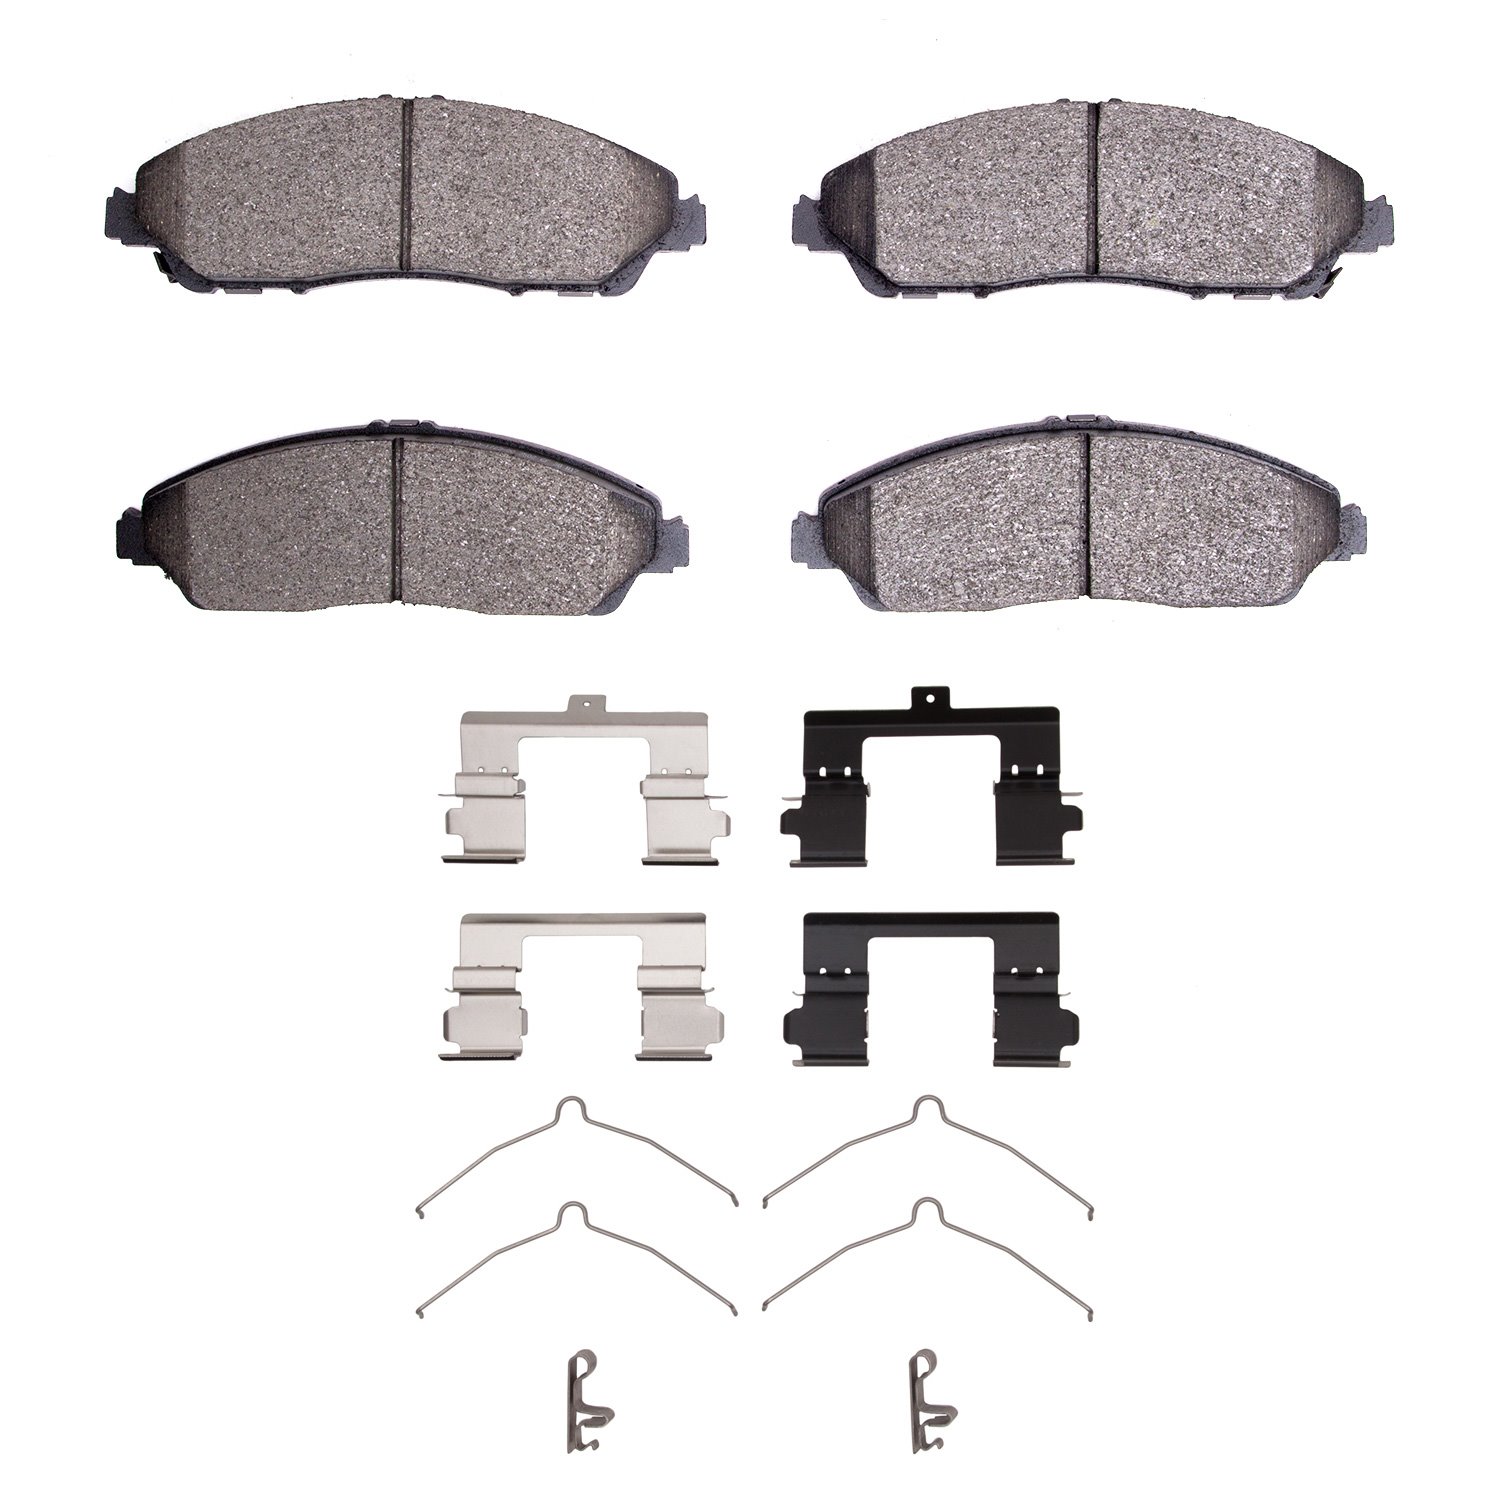 1551-1723-01 5000 Advanced Ceramic Brake Pads & Hardware Kit, Fits Select Acura/Honda, Position: Front